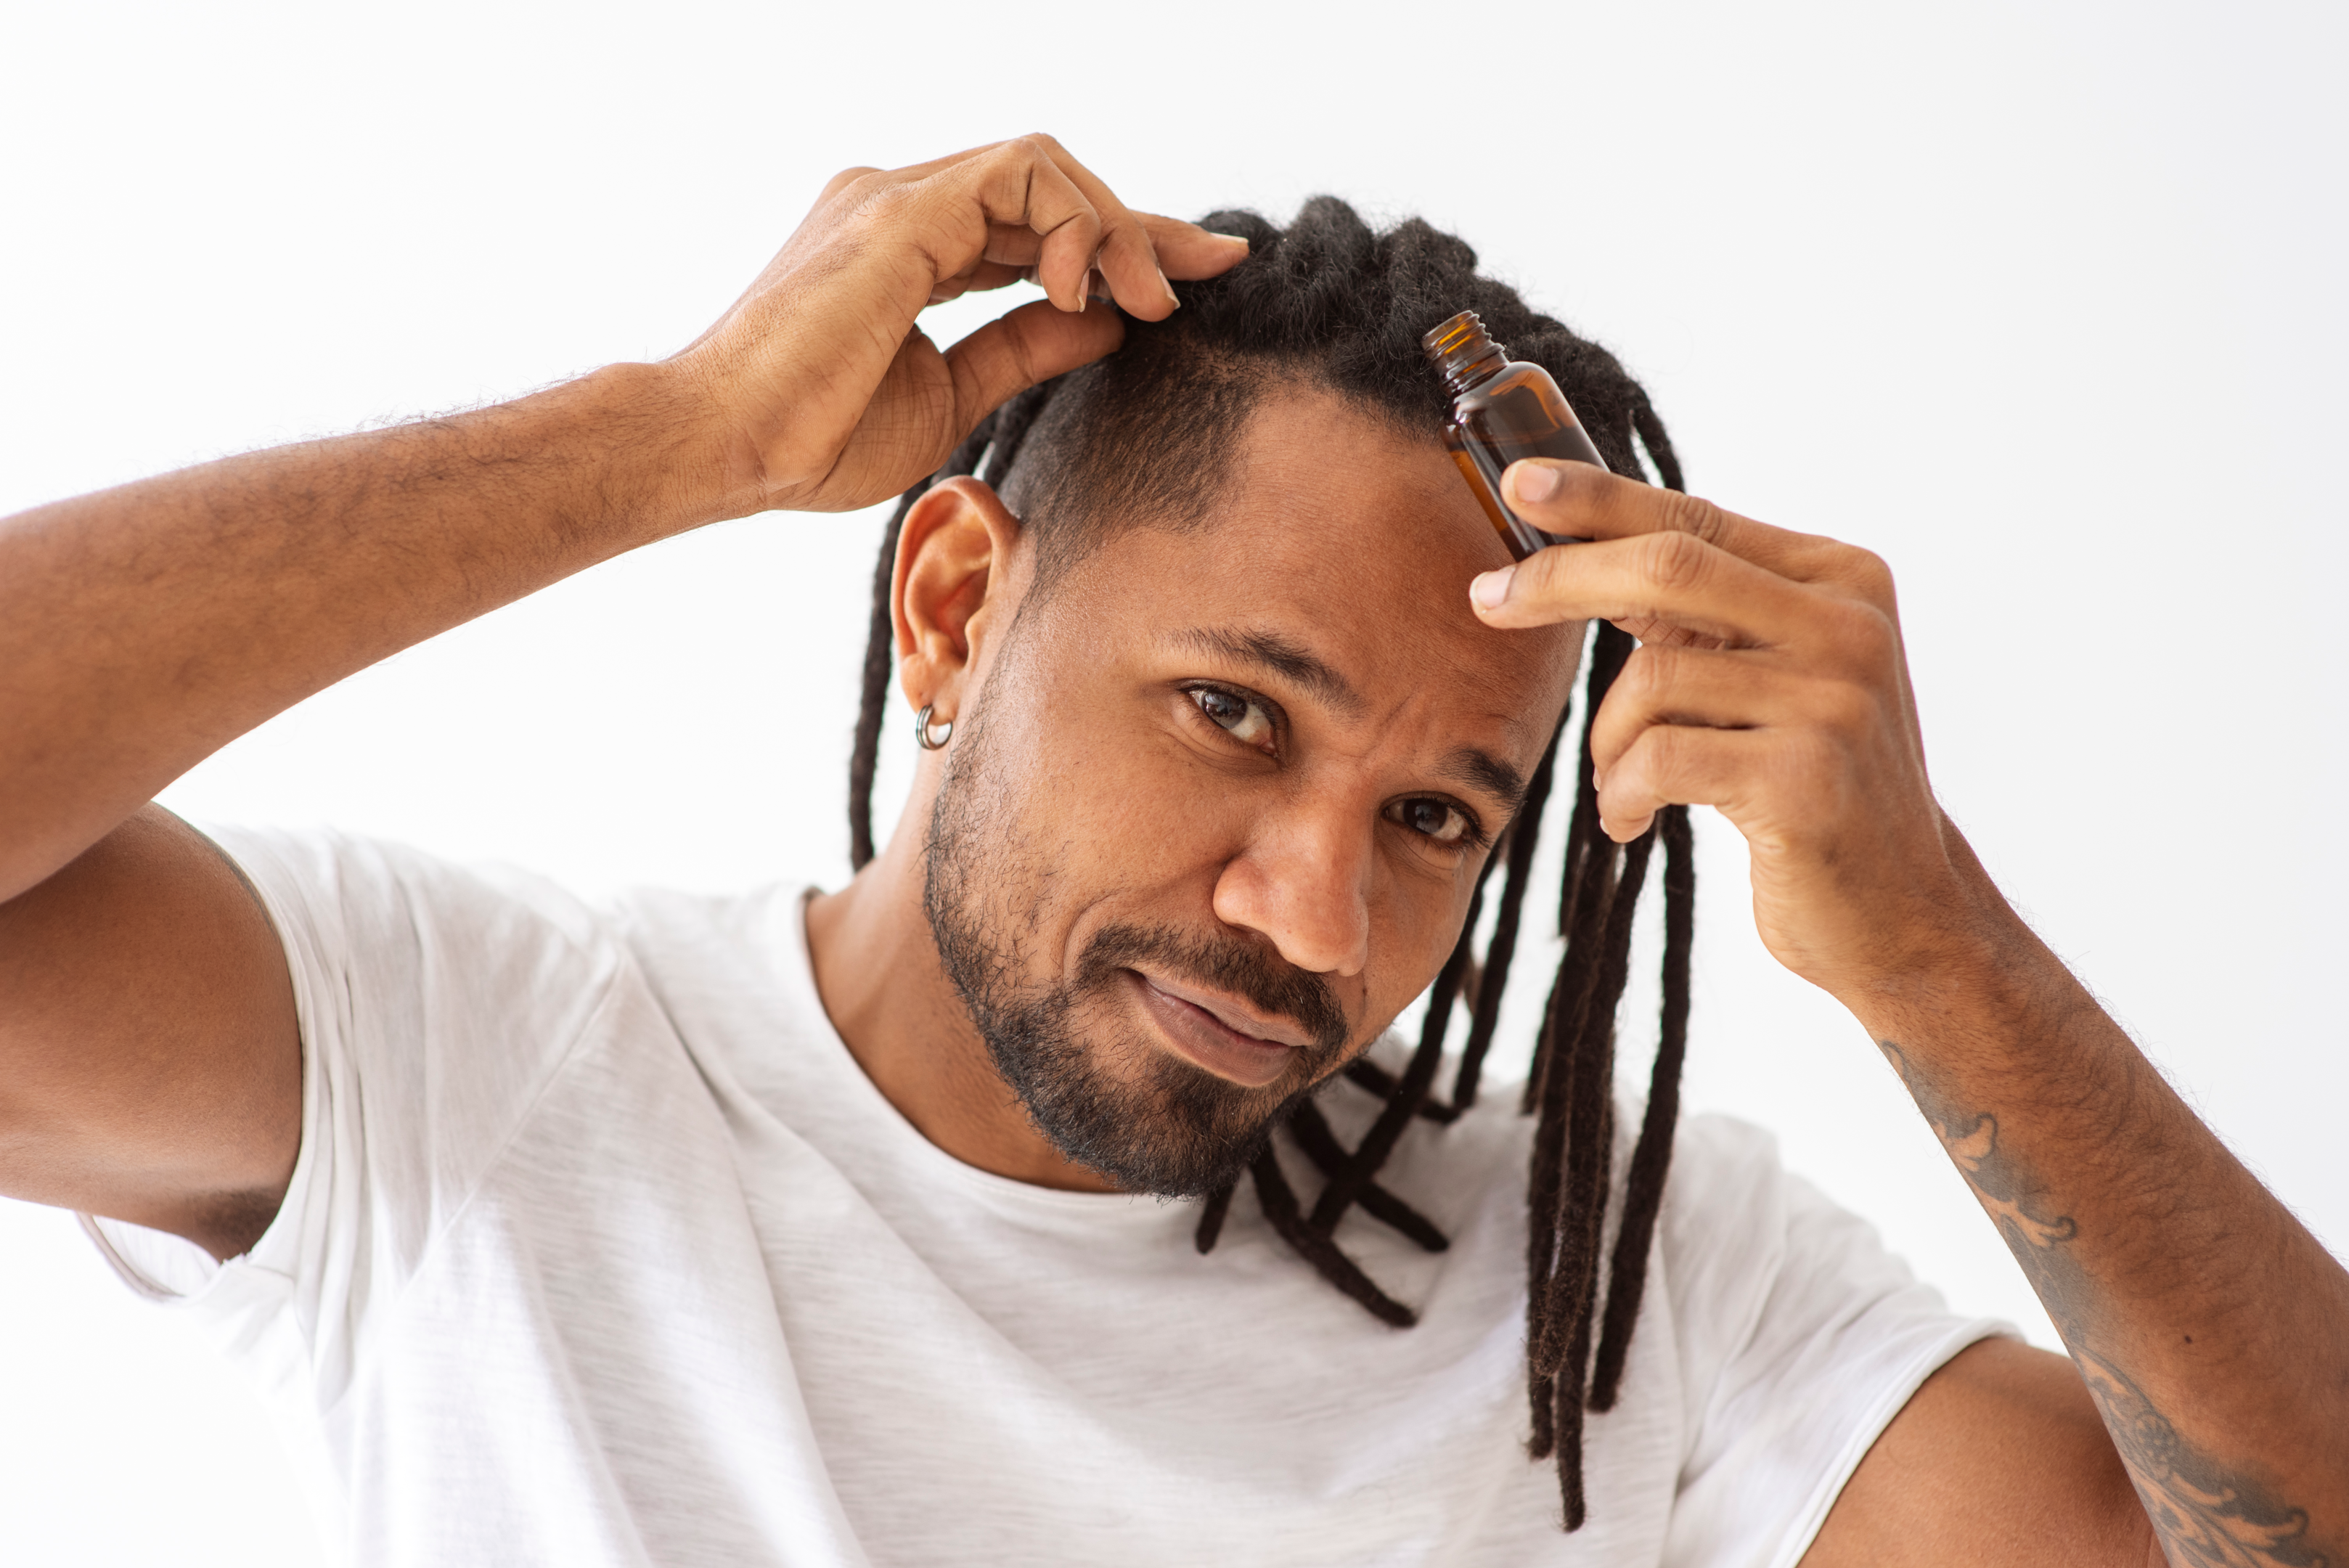 hair loss treatment can work to regrow hair follicles and treat hereditary hair loss